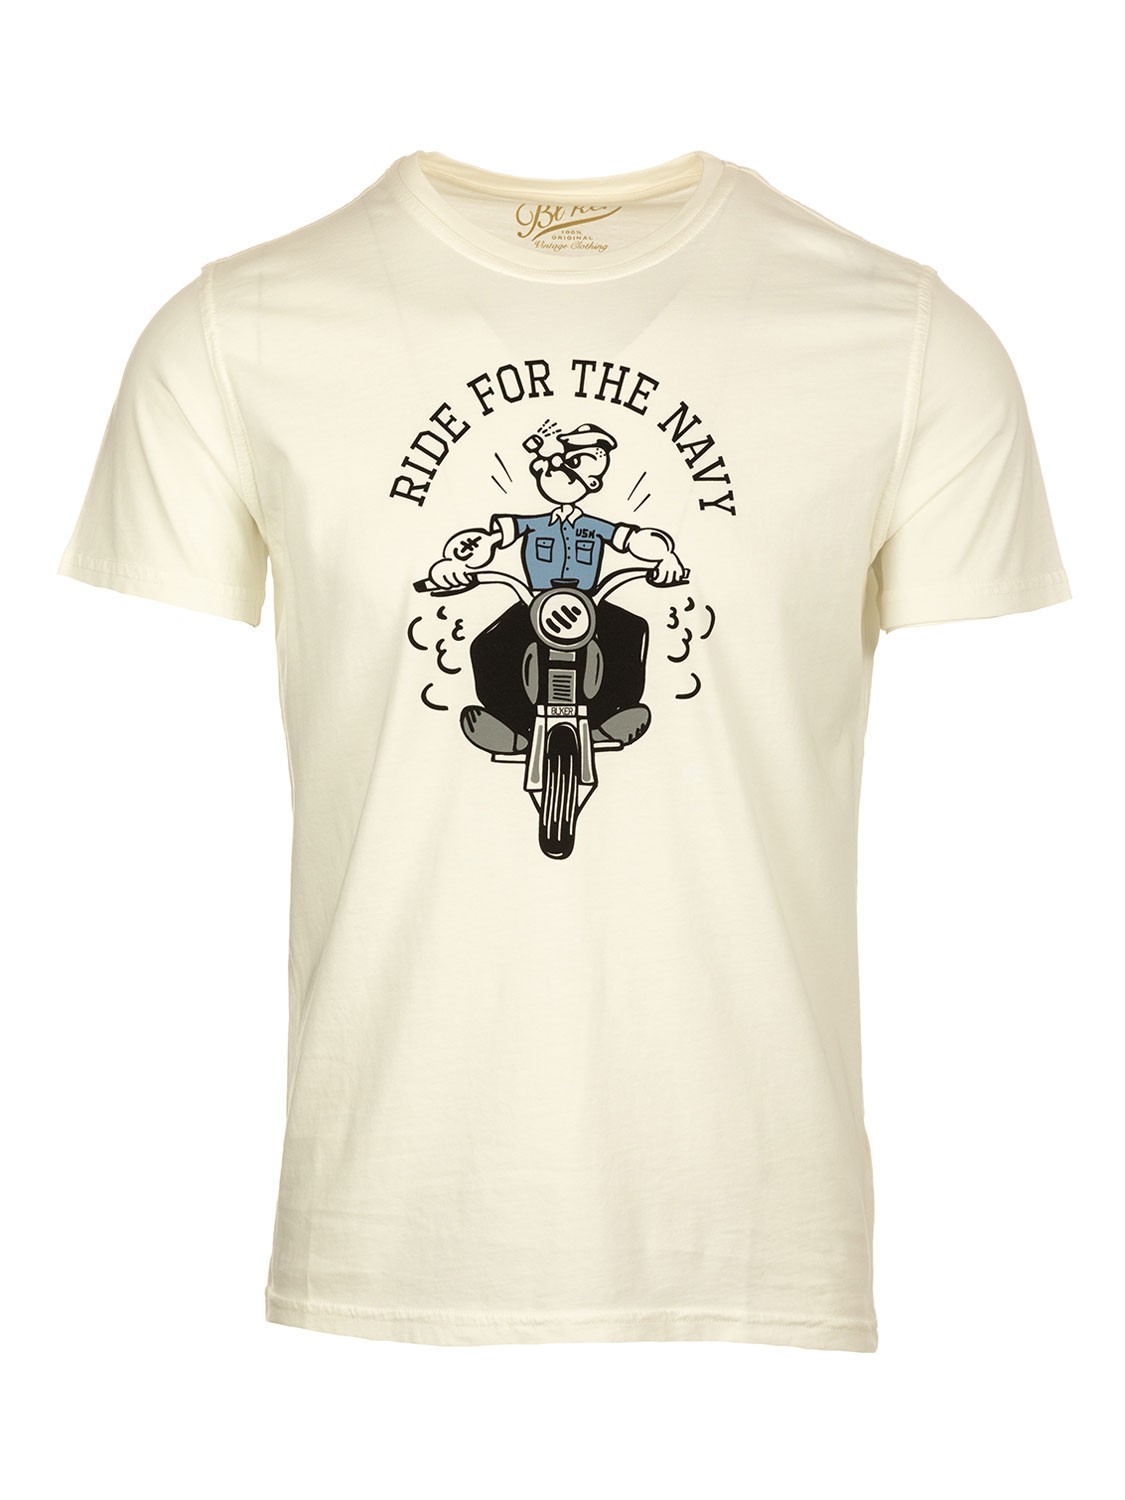 Bl'ker T-shirt Uomo Graphic Navy Rider